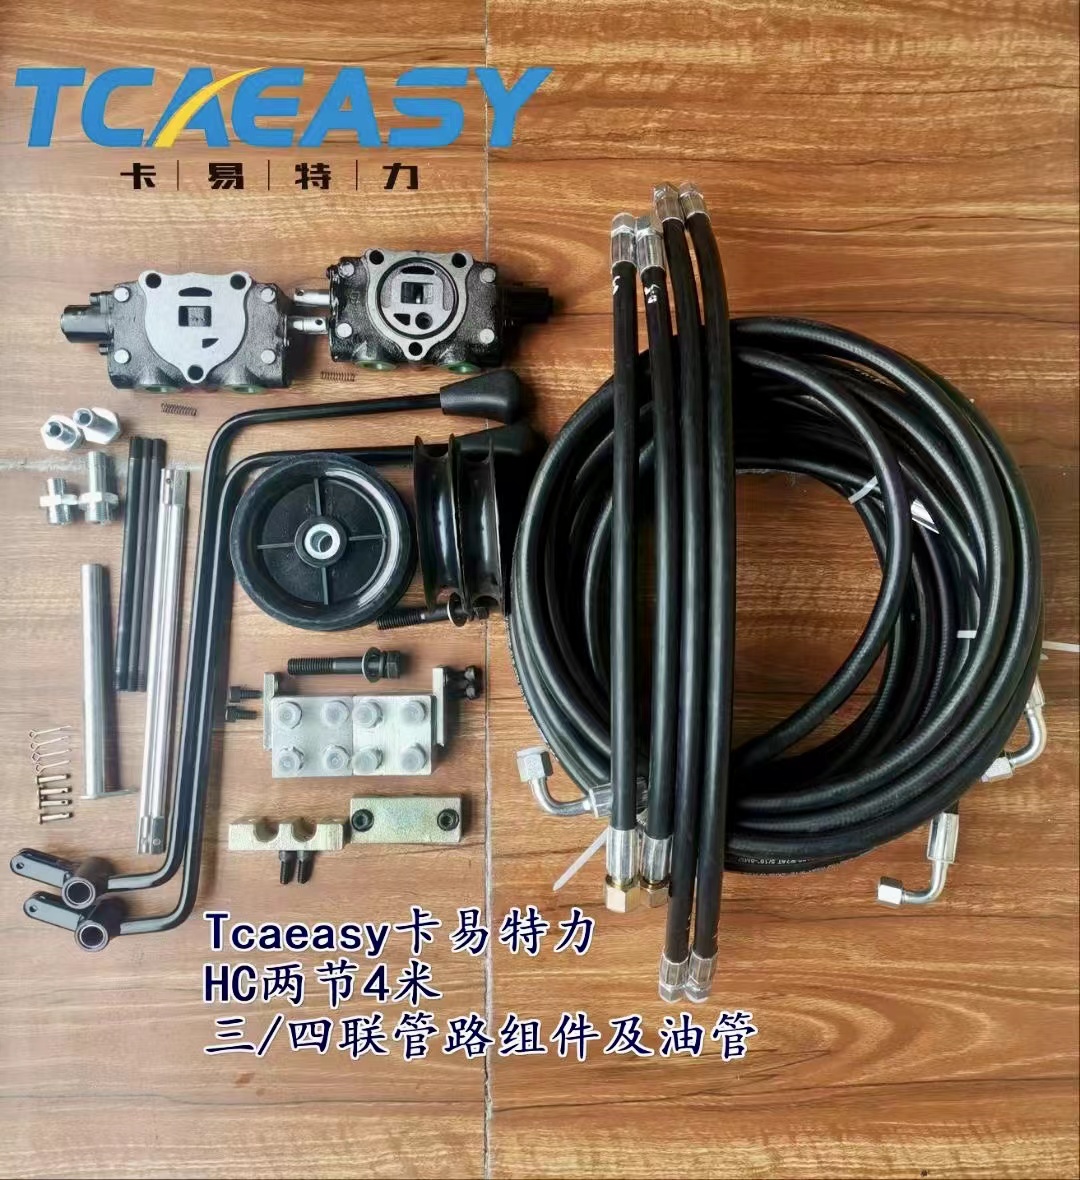 HANGZHOU Forklift Attachment Tubing HC1001